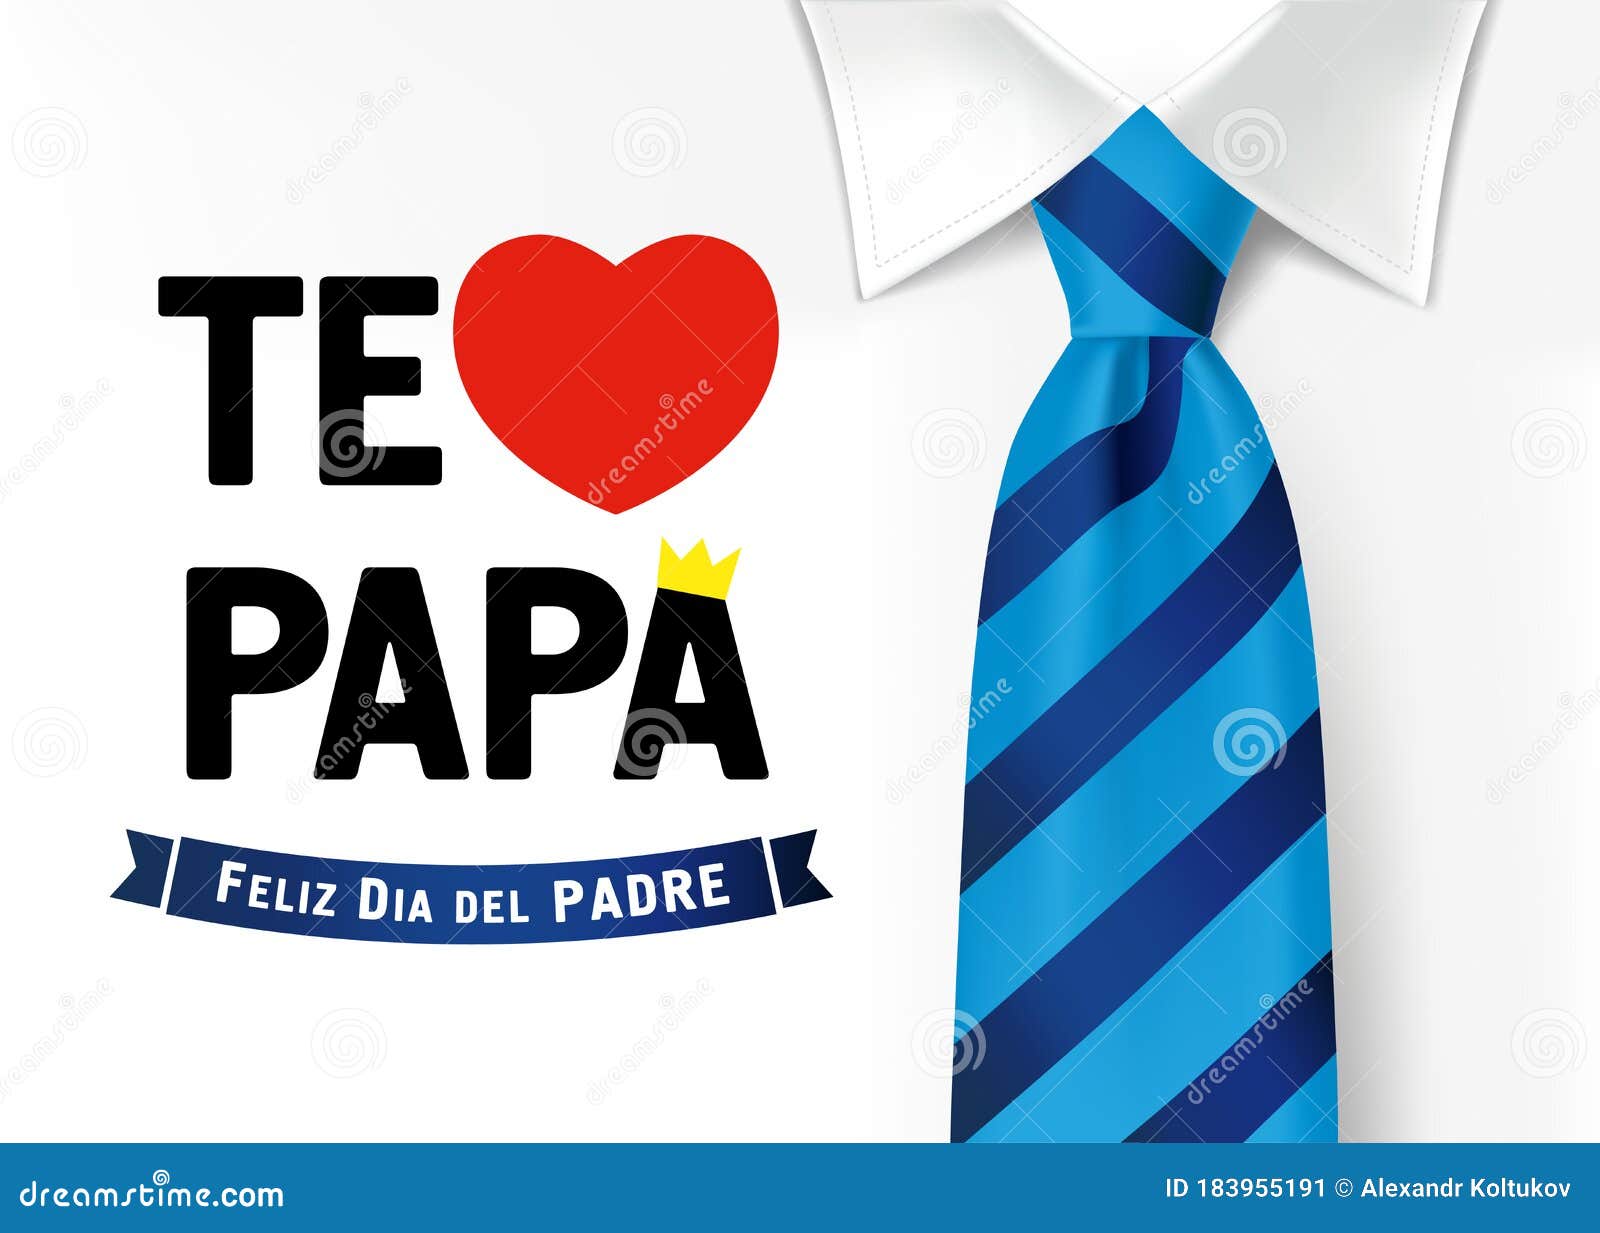 Te Amo Papa, Feliz Dia Del Padre Spanish Typography I Love You Dad Stock  Vector - Illustration of card, celebration: 183955191